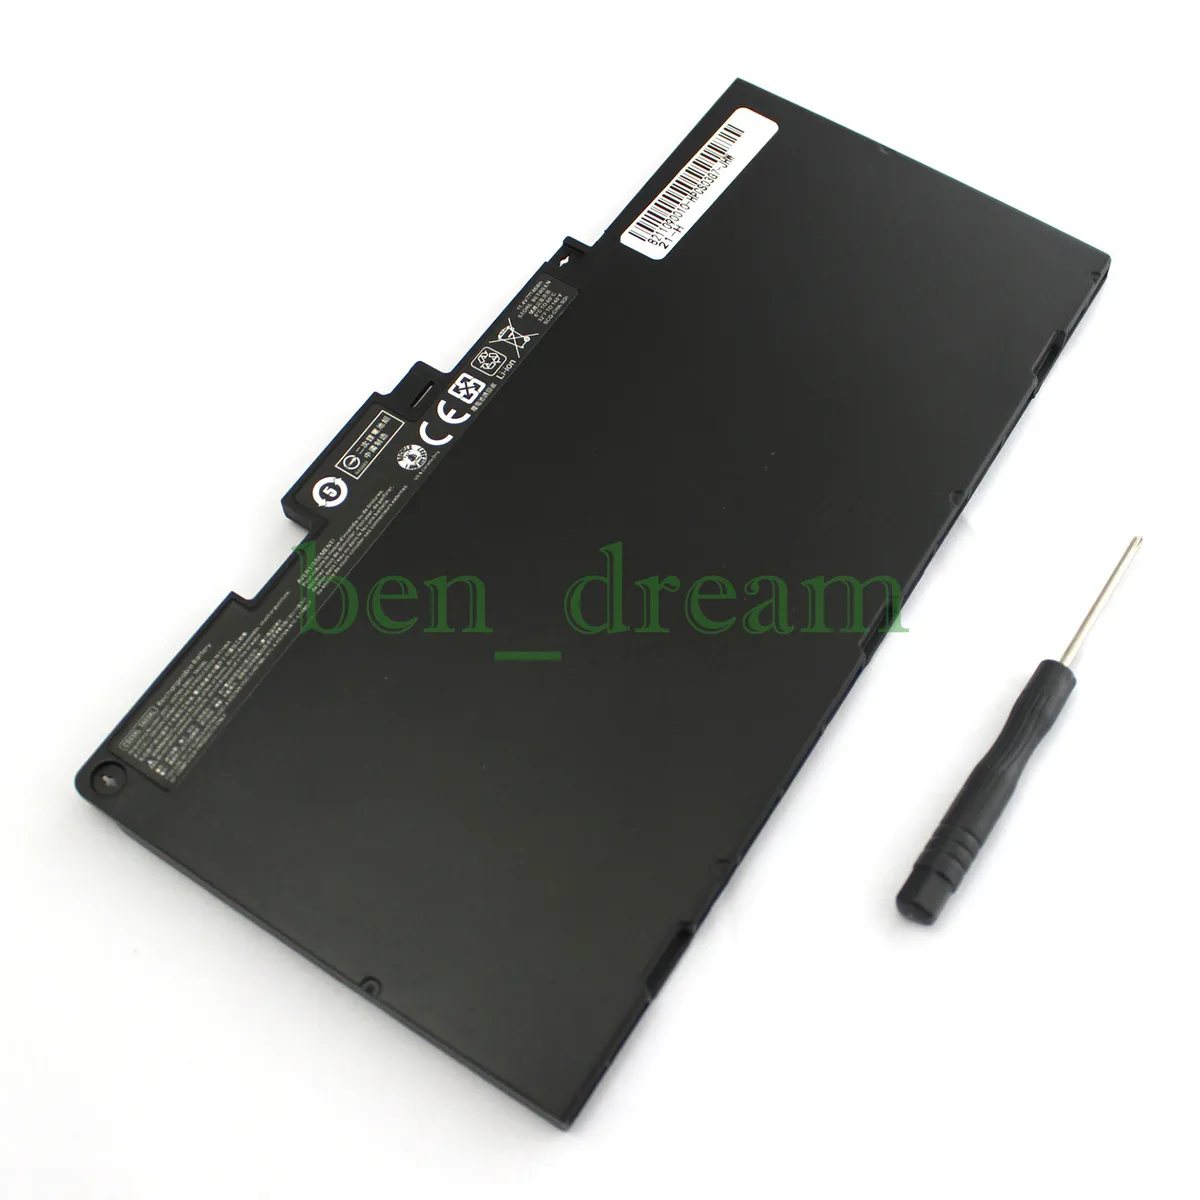 EliteBook 848 G3 Notebook PC